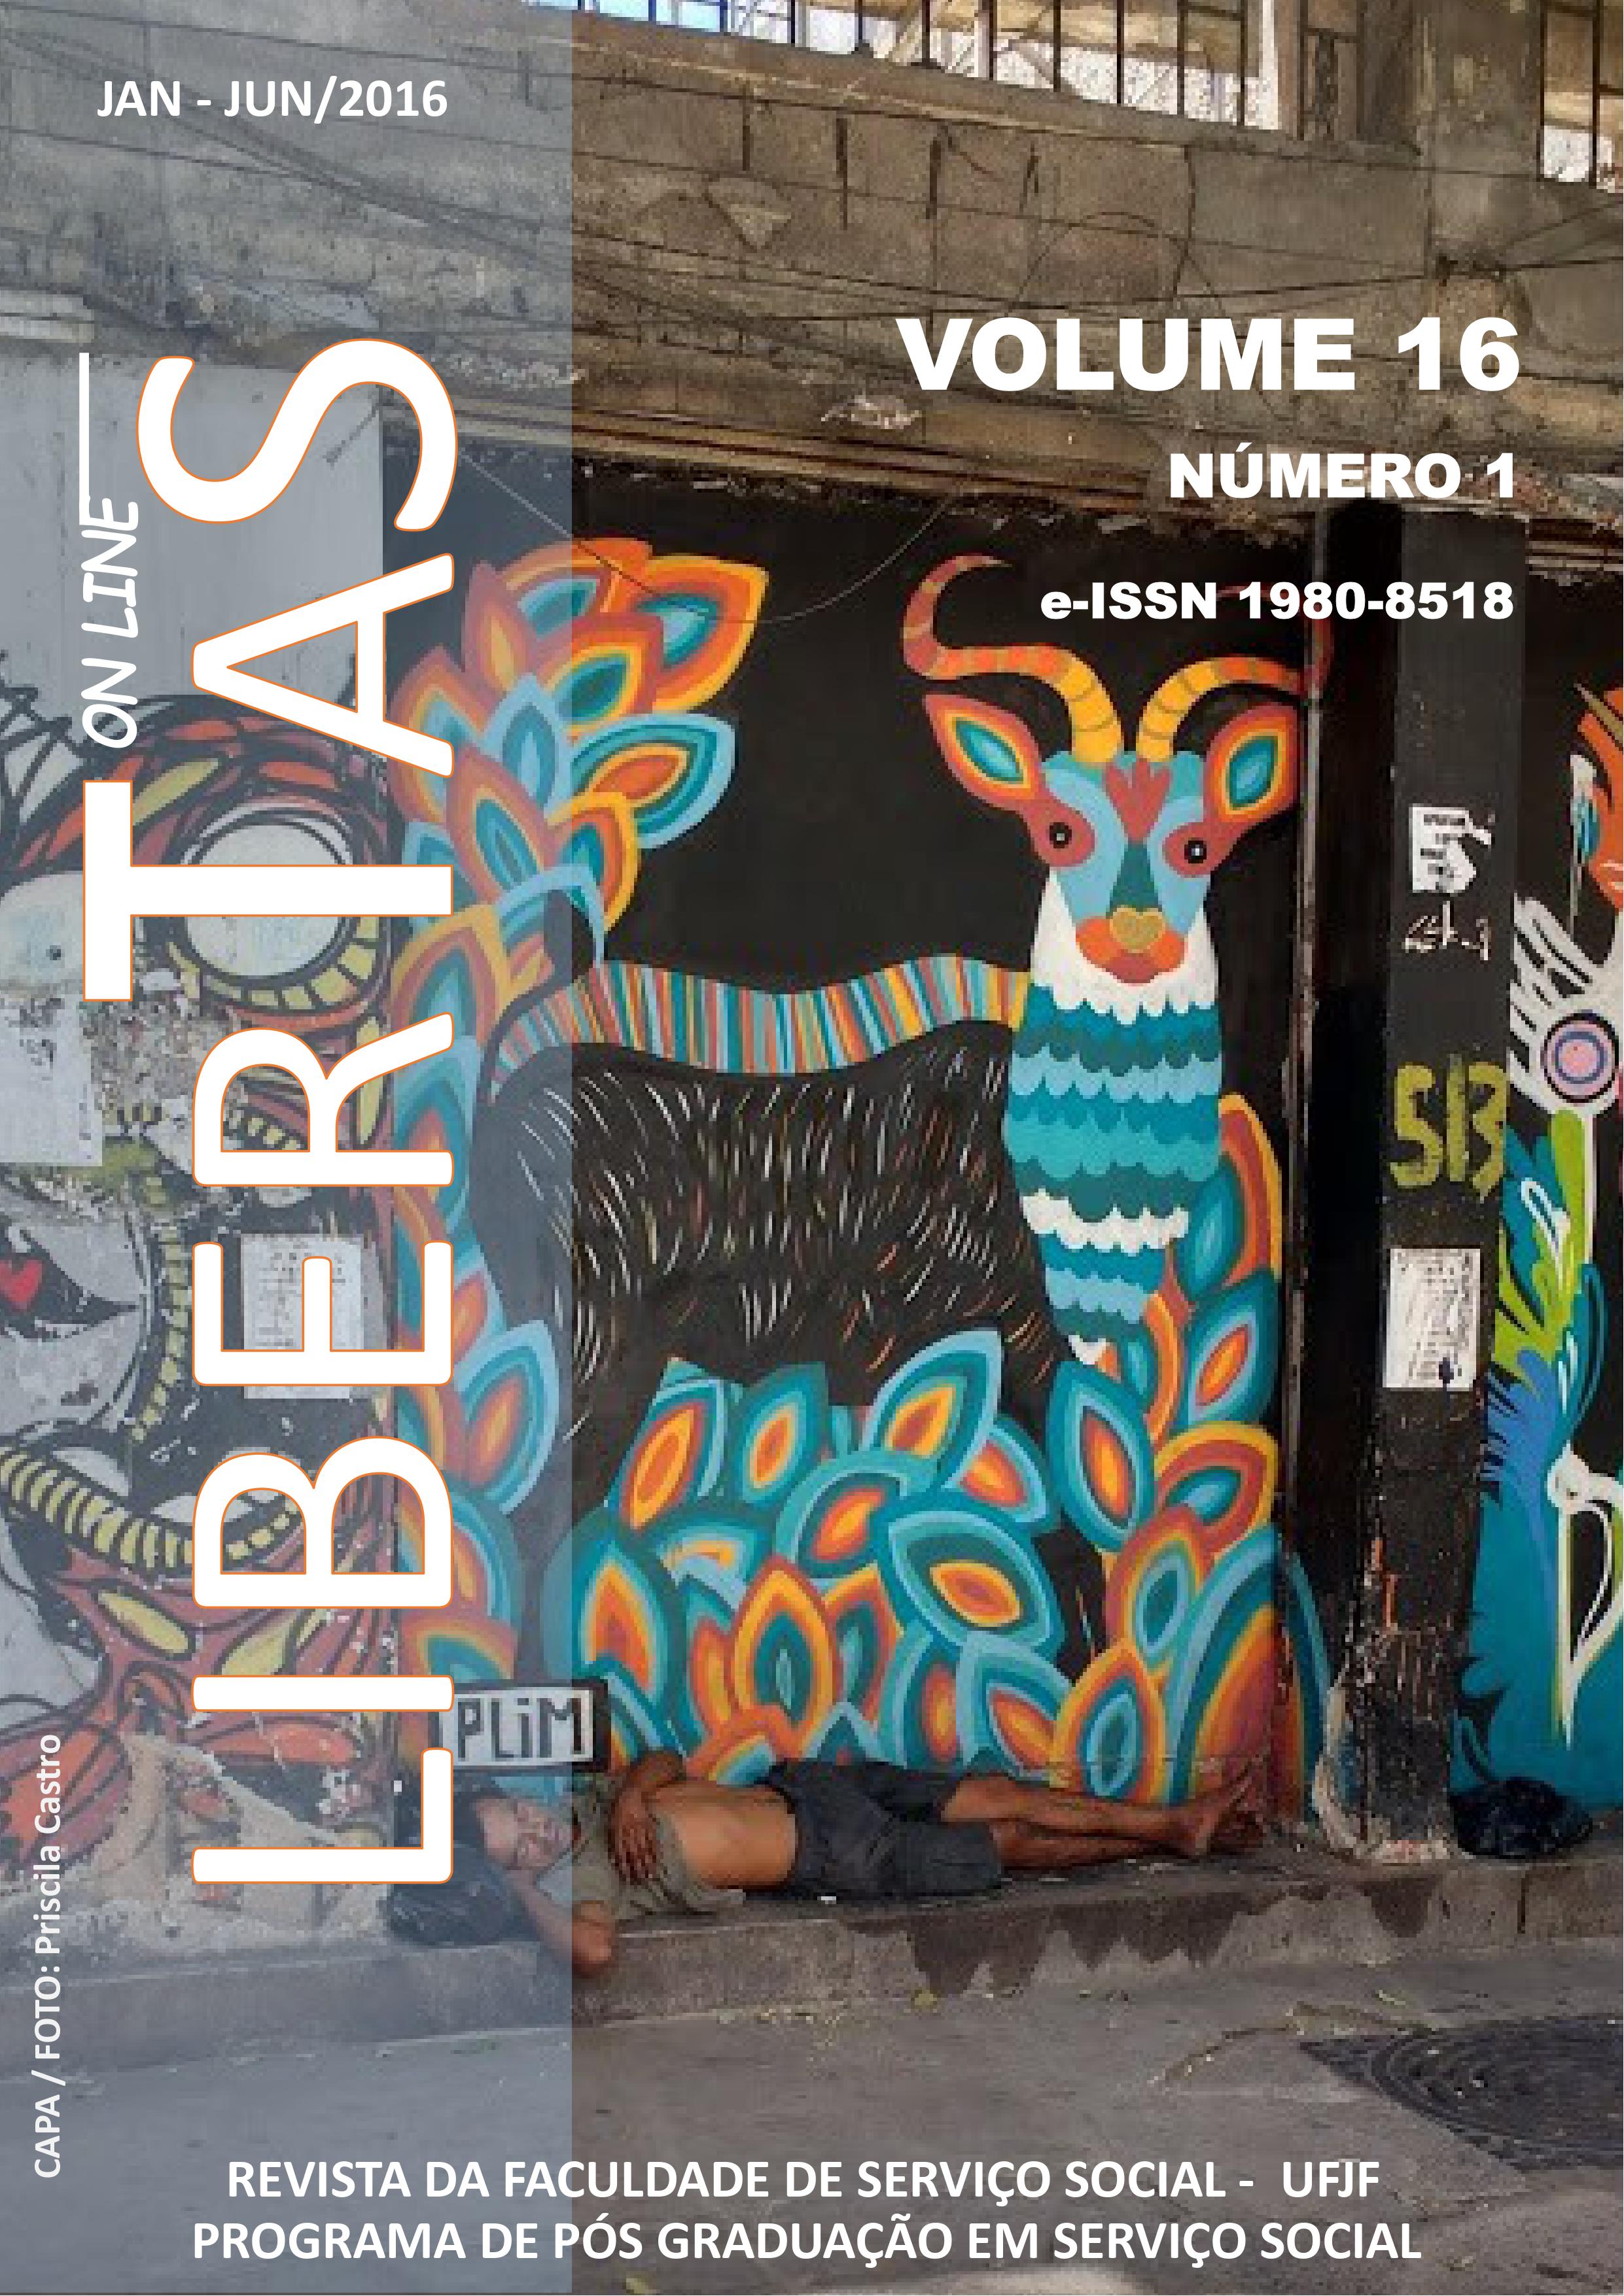 					Visualizar v. 16 n. 1 (2016): Revista Libertas - ISSN: 1980-8518 (jan. jun. 2016)
				